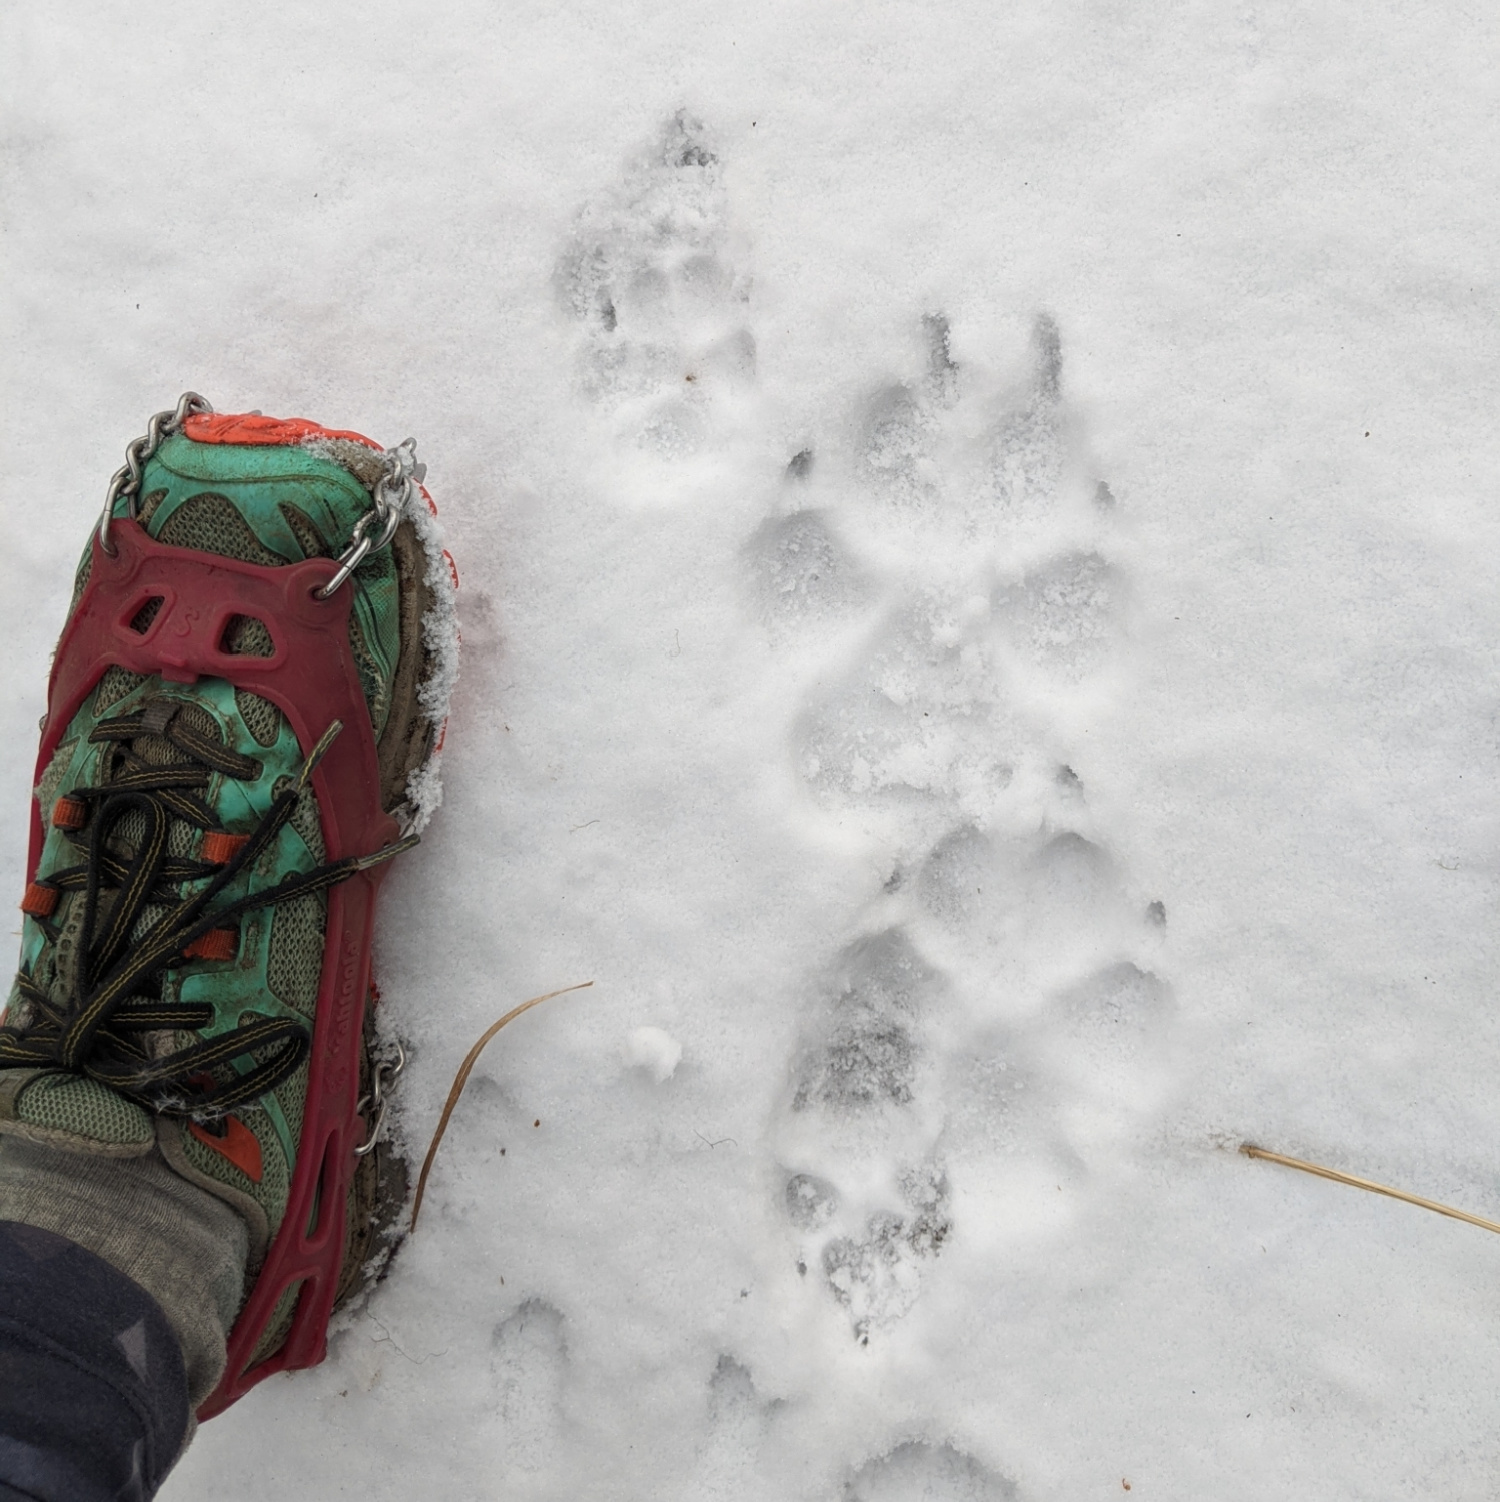 Wolf tracks dwarf domestic dog tracks in the snow.